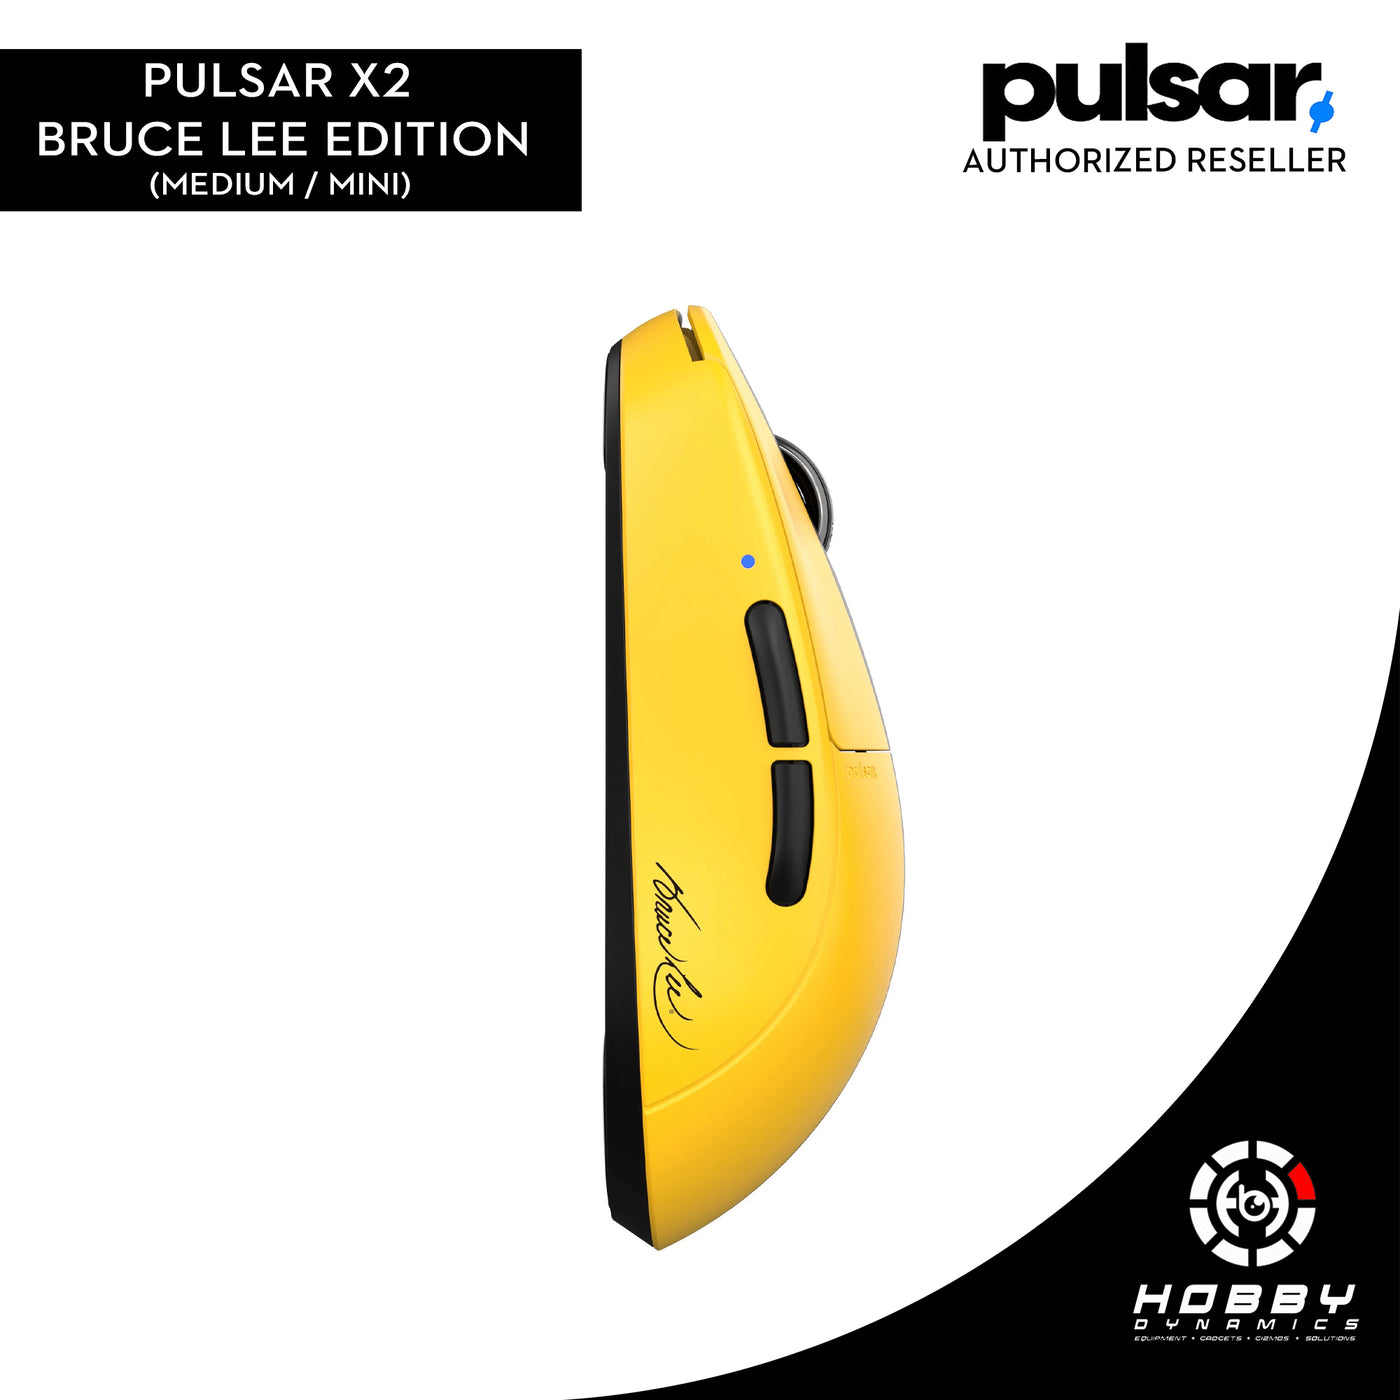 Pulsar X2 Gaming Mouse [Bruce Lee Edition]  (Medium / Mini)